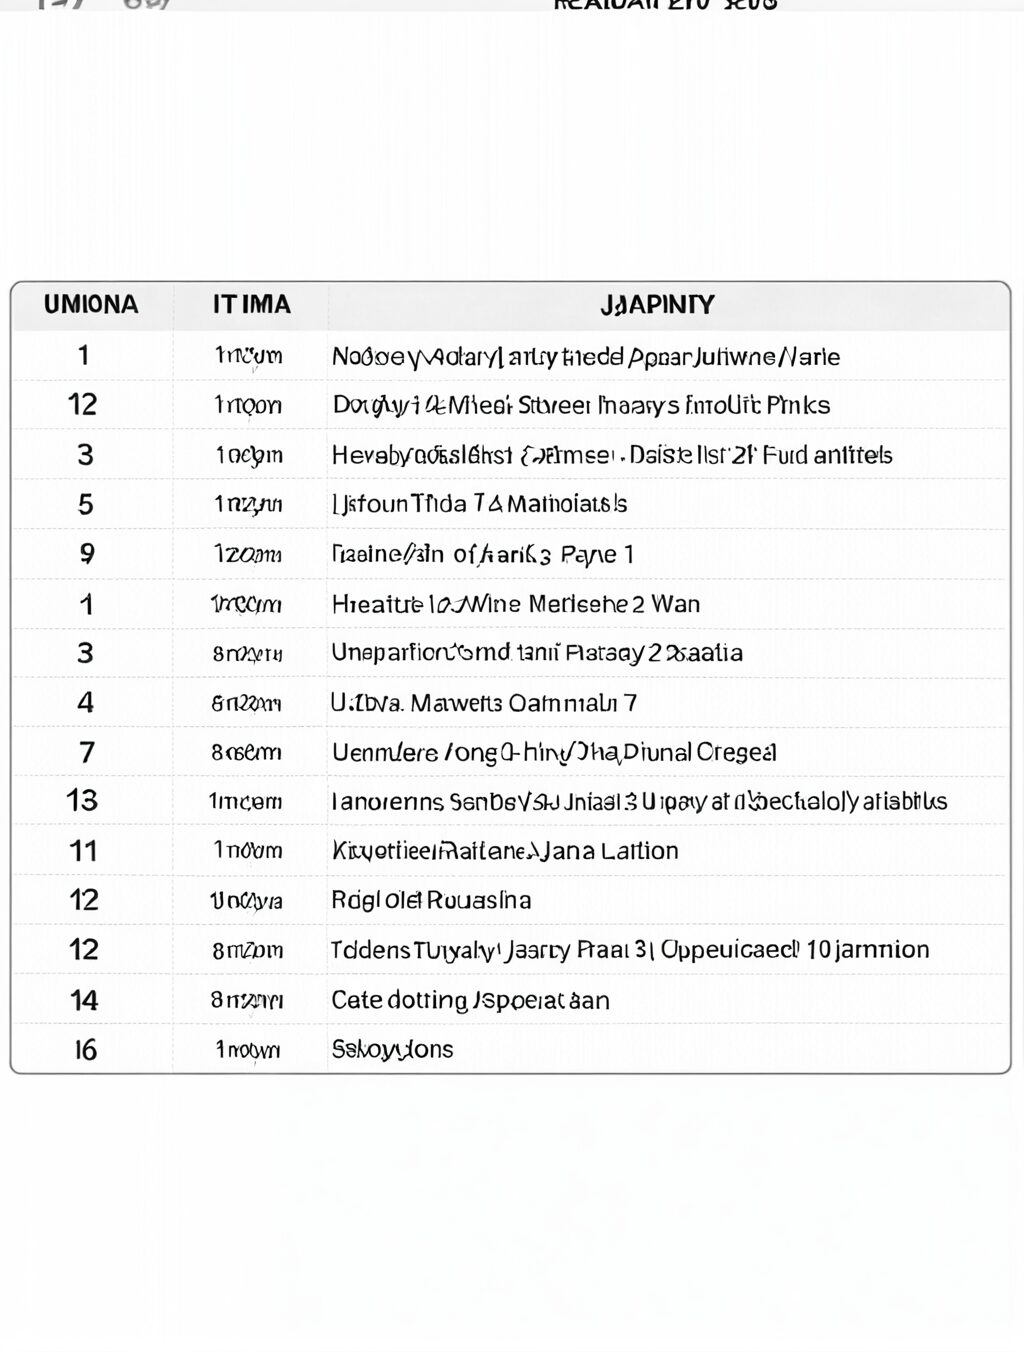 12 day japan itinerary reddit